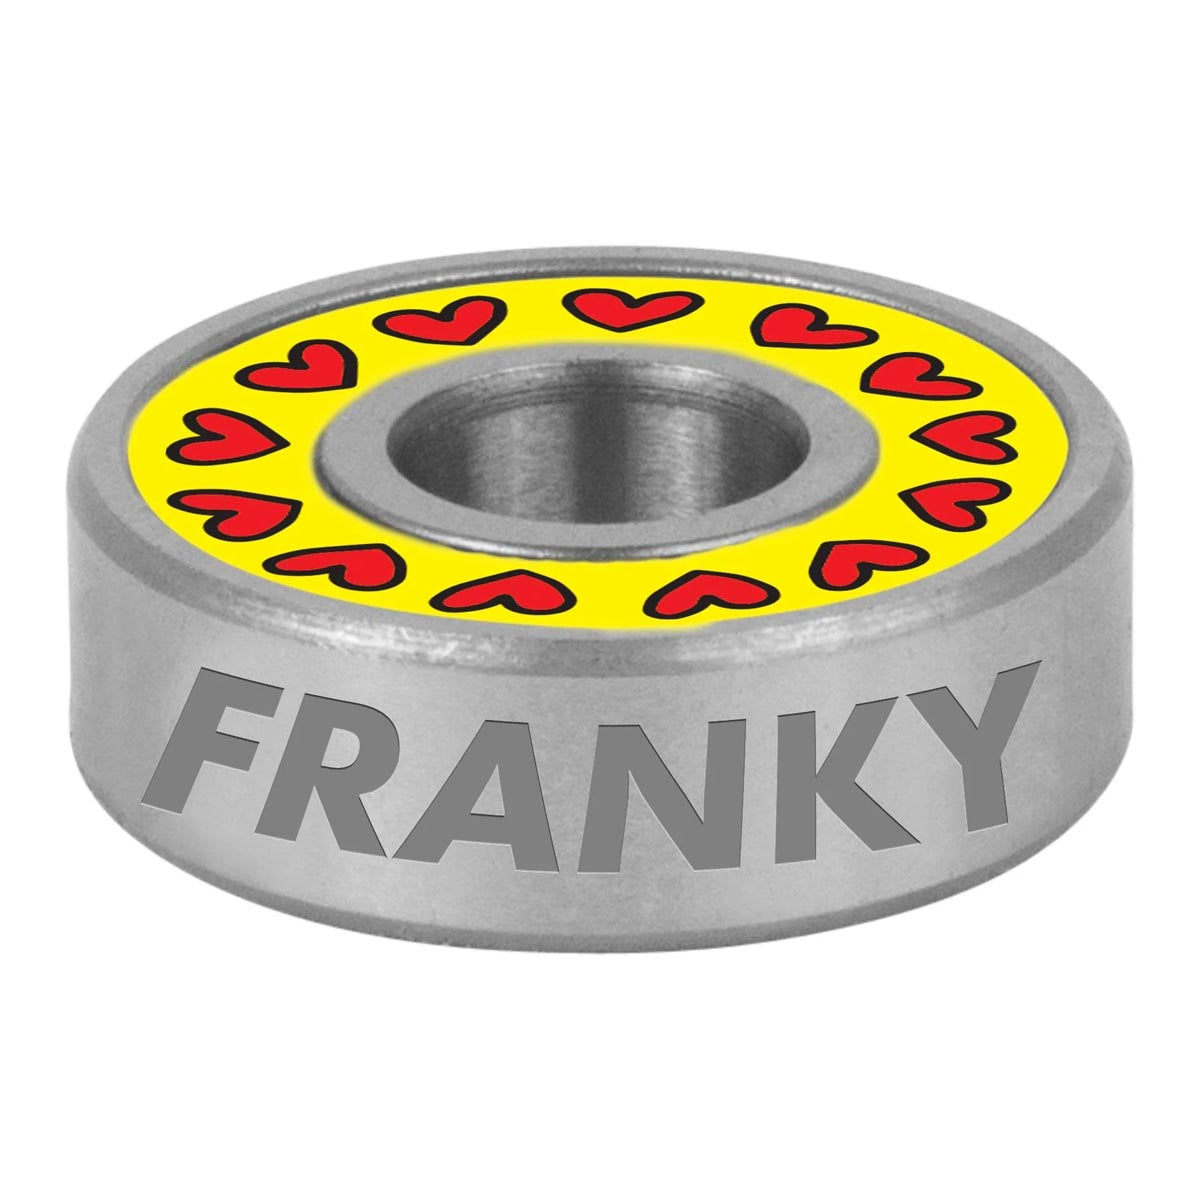 Bronson Franky Villani Pro G3 Bearings - Yellow image 4